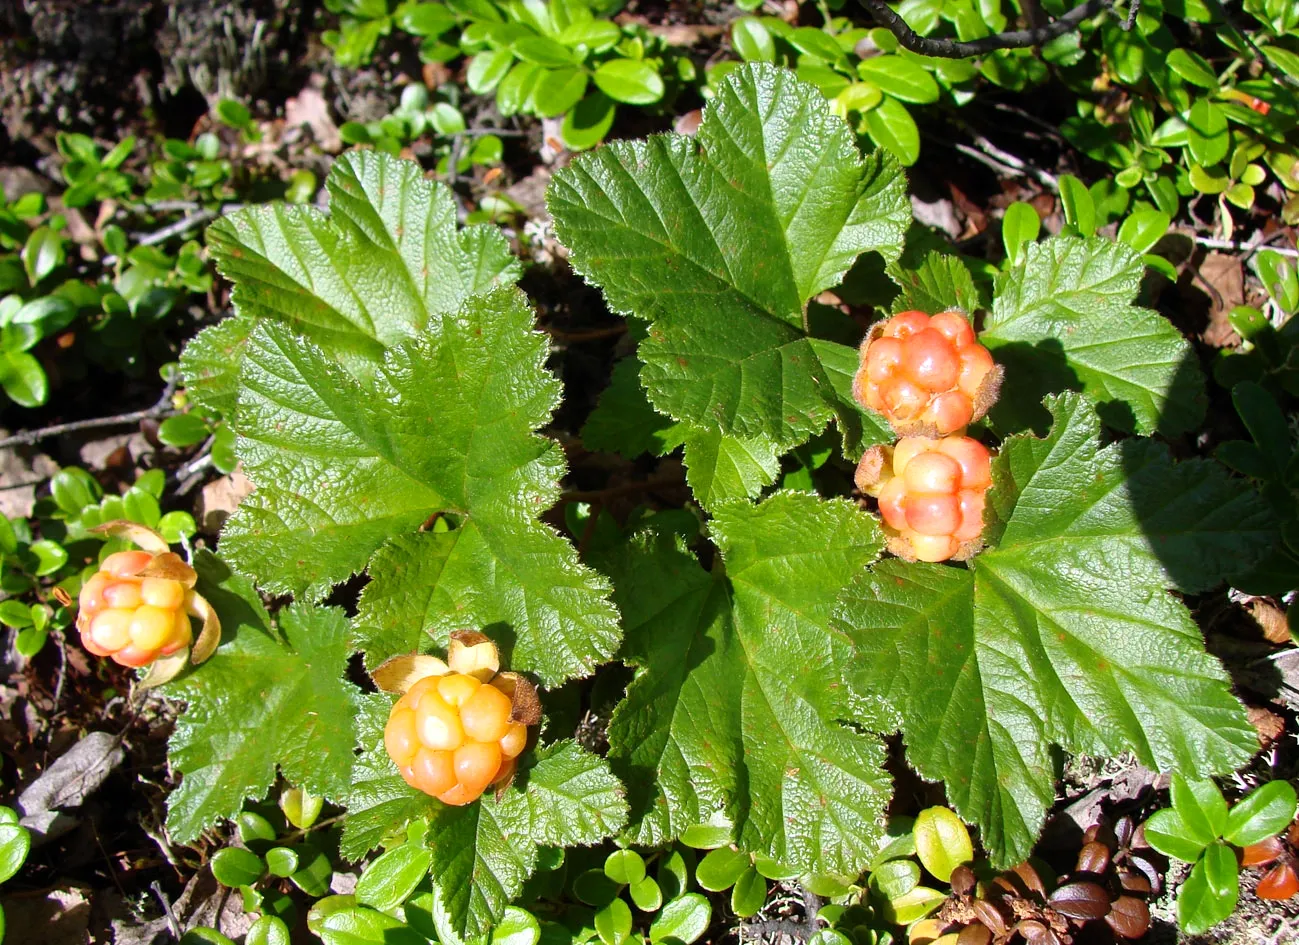 Rubus chamaemorus